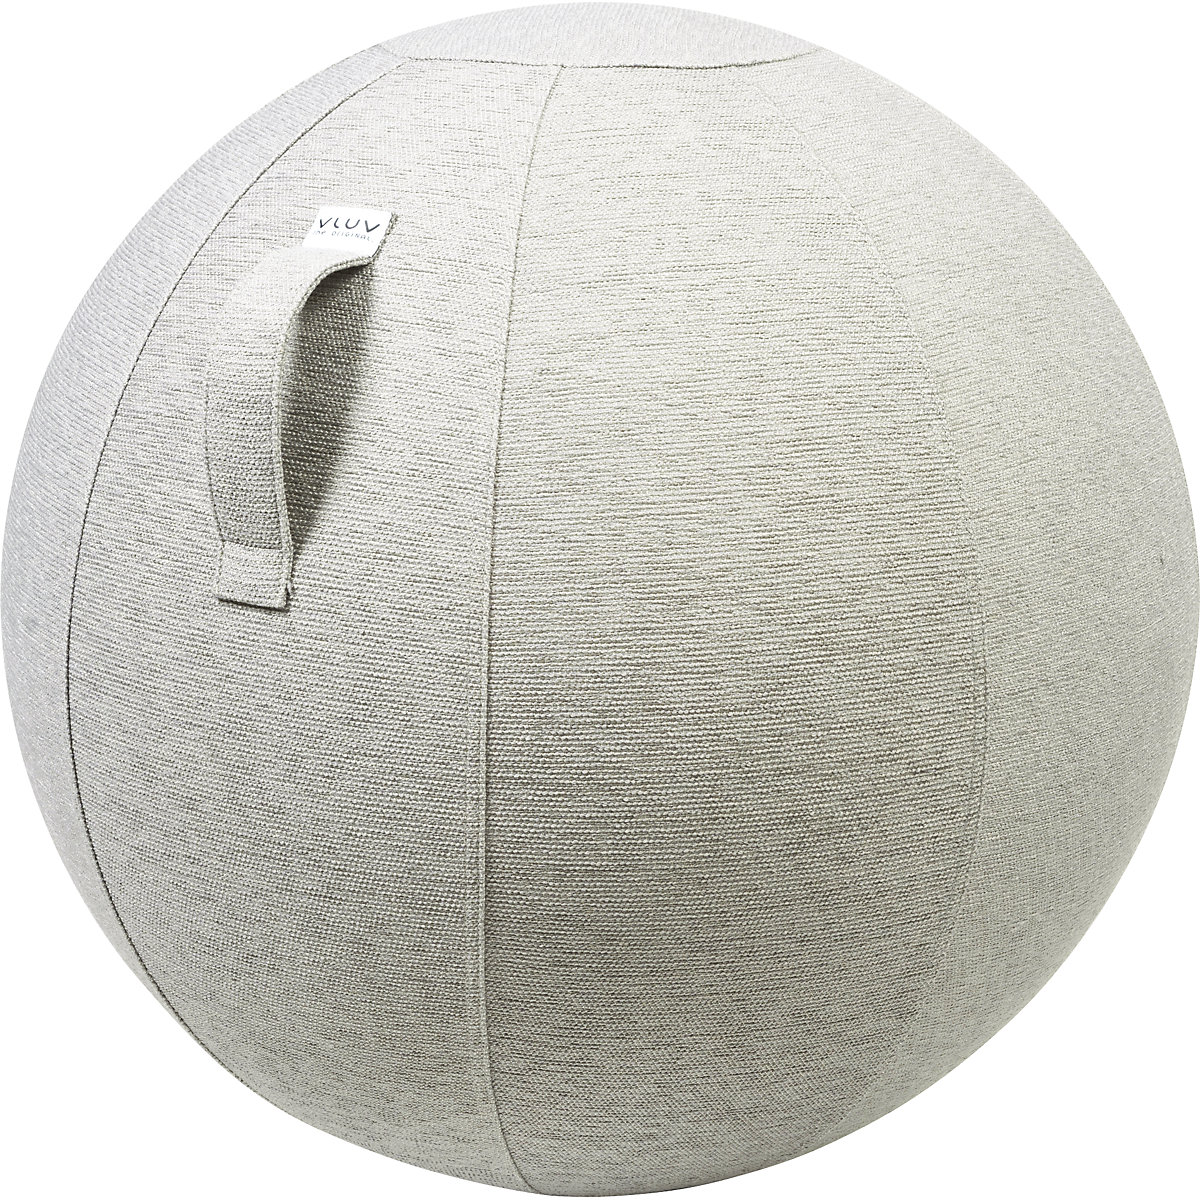 STOV Swiss ball – VLUV, fabric version, 700 – 750 mm, cement grey